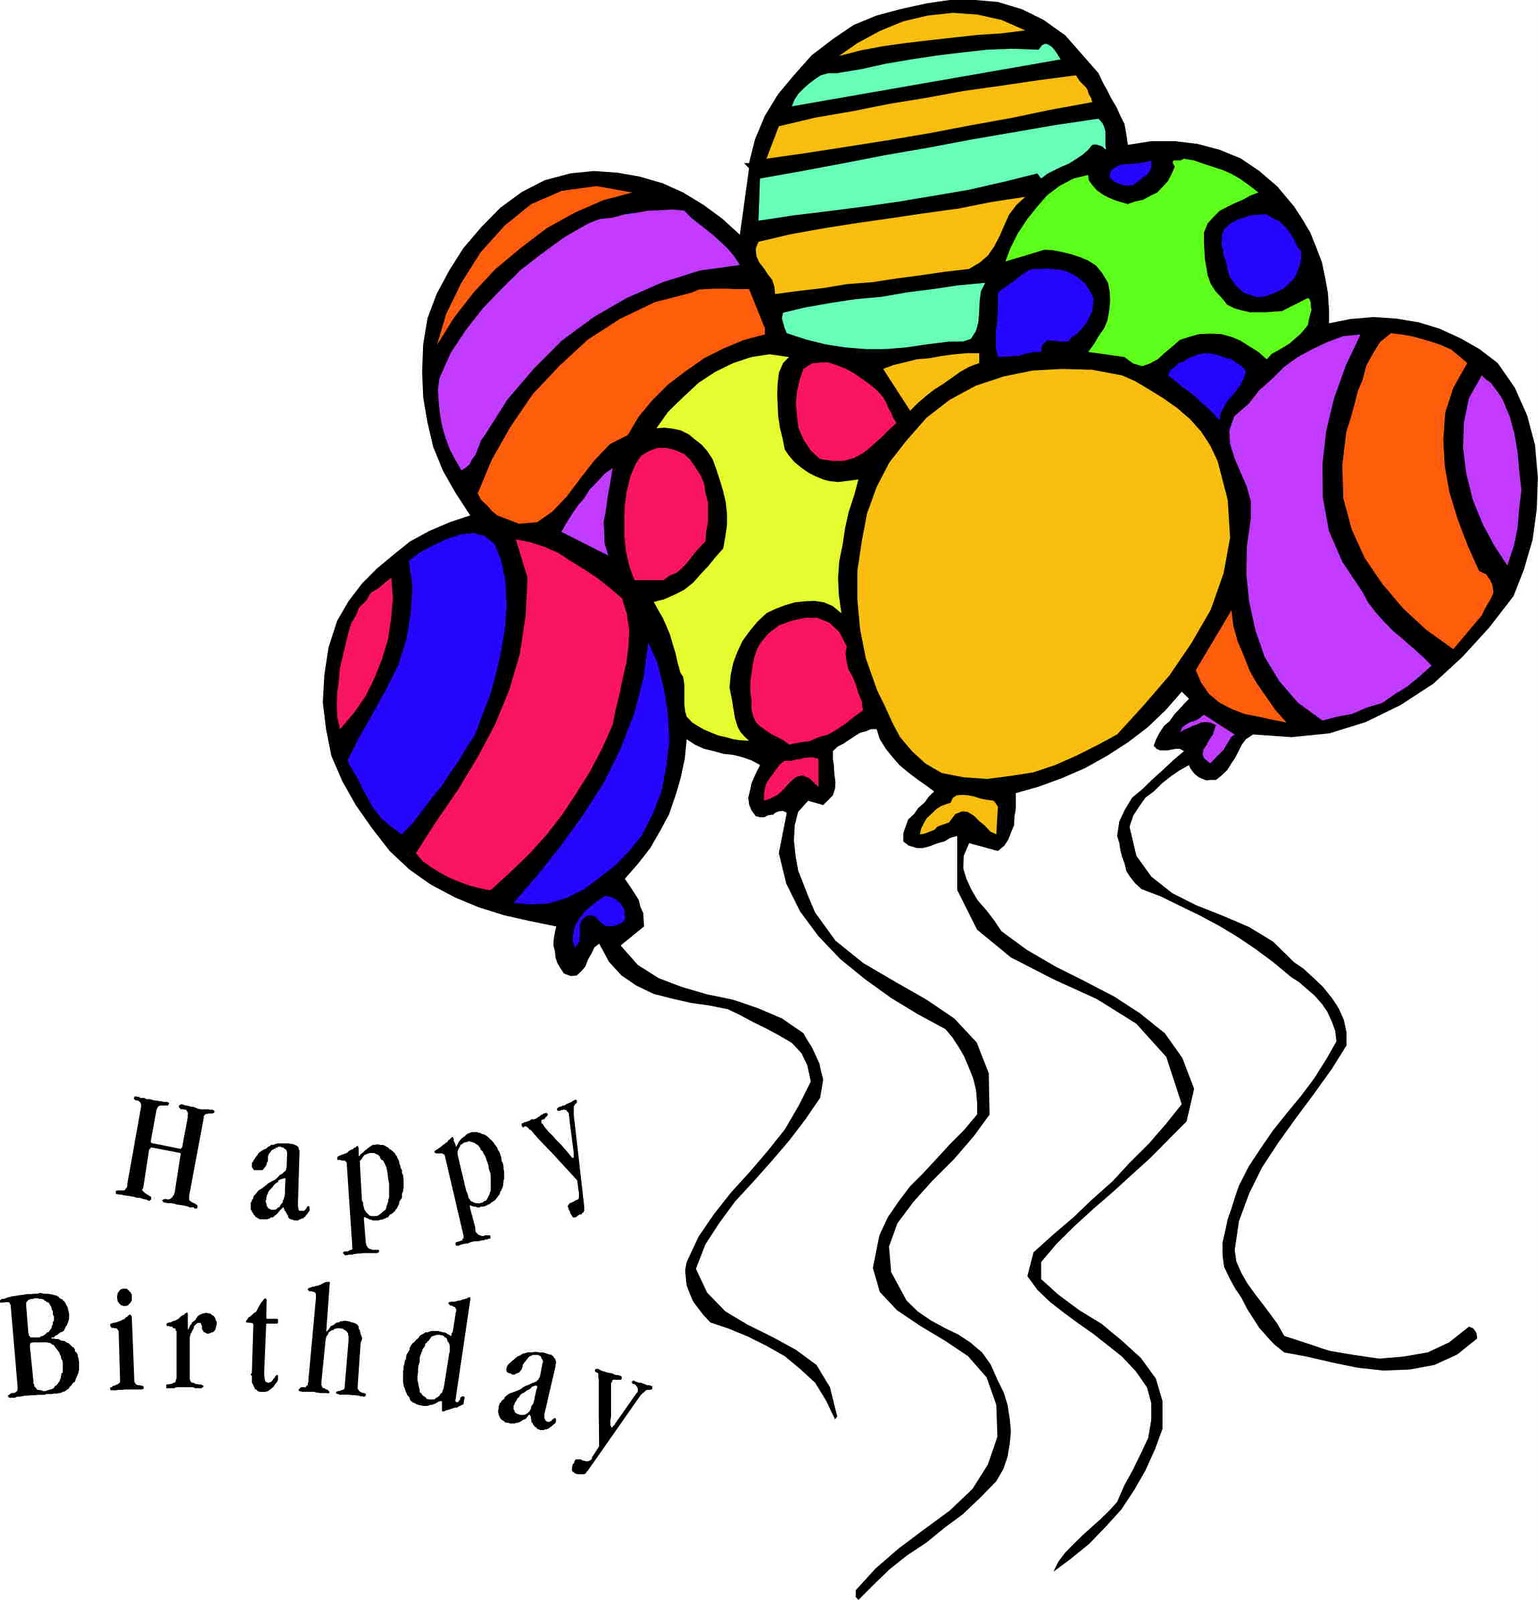 happy-birthday-balloons-clipart-2-clipartix